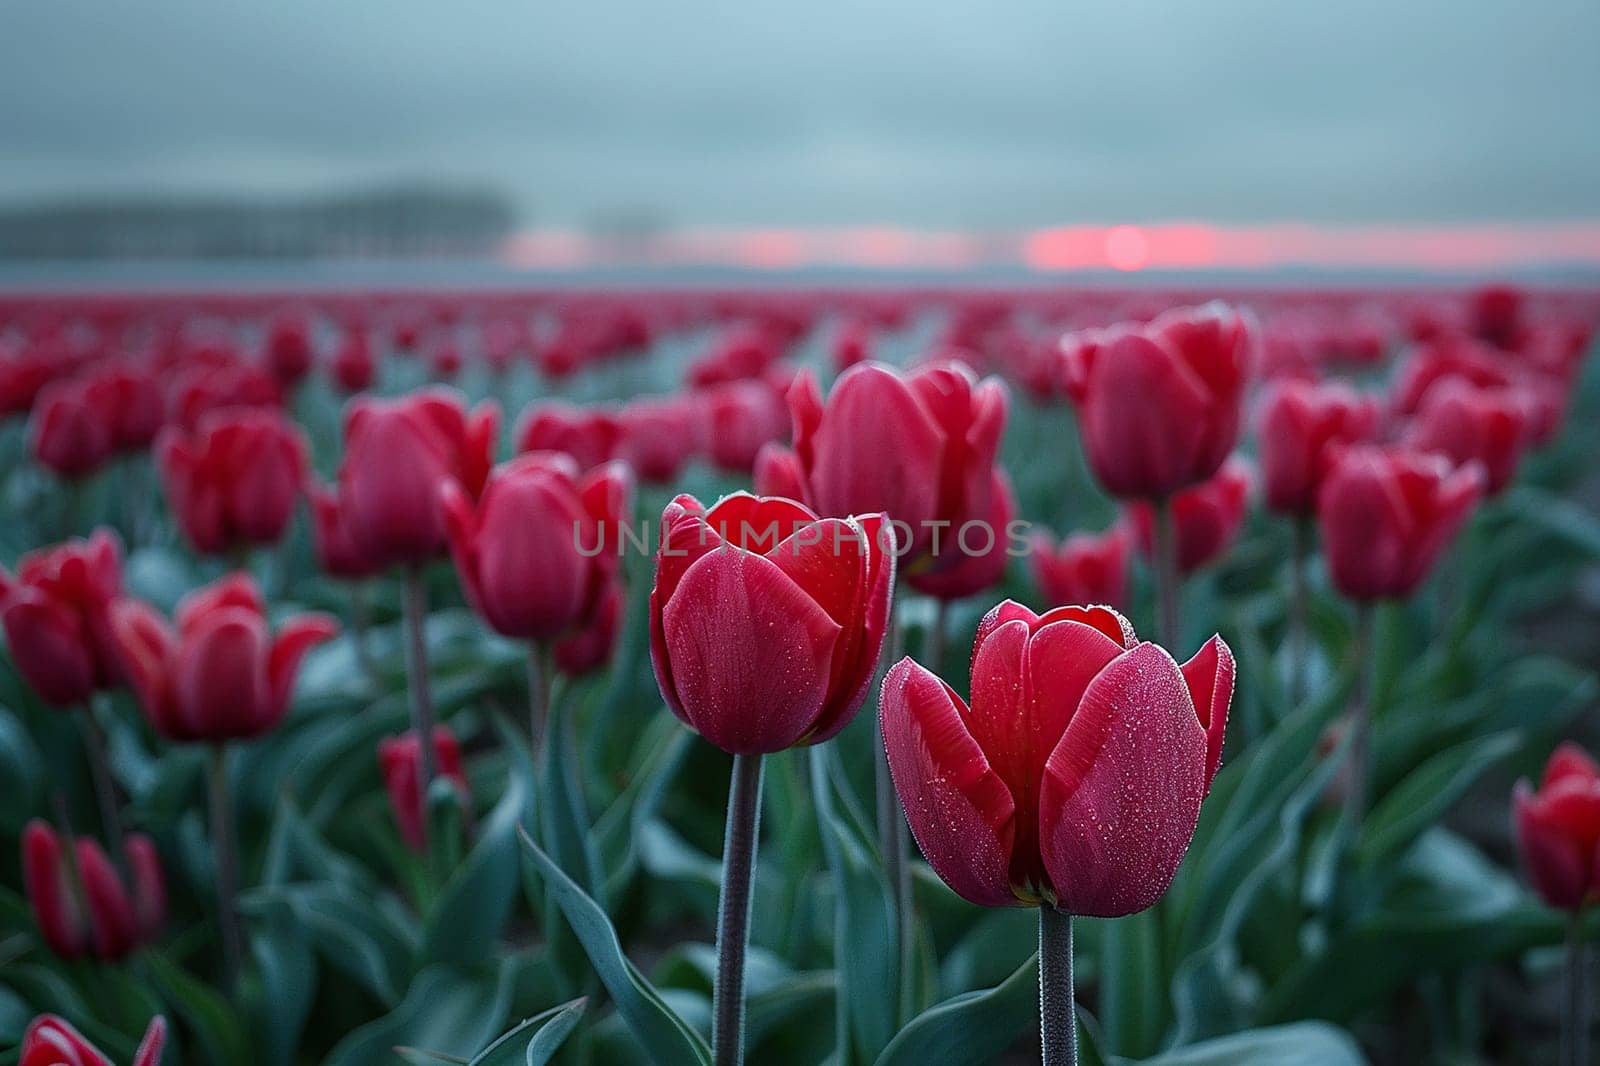 Beautiful red tulips in dramatic lighting.